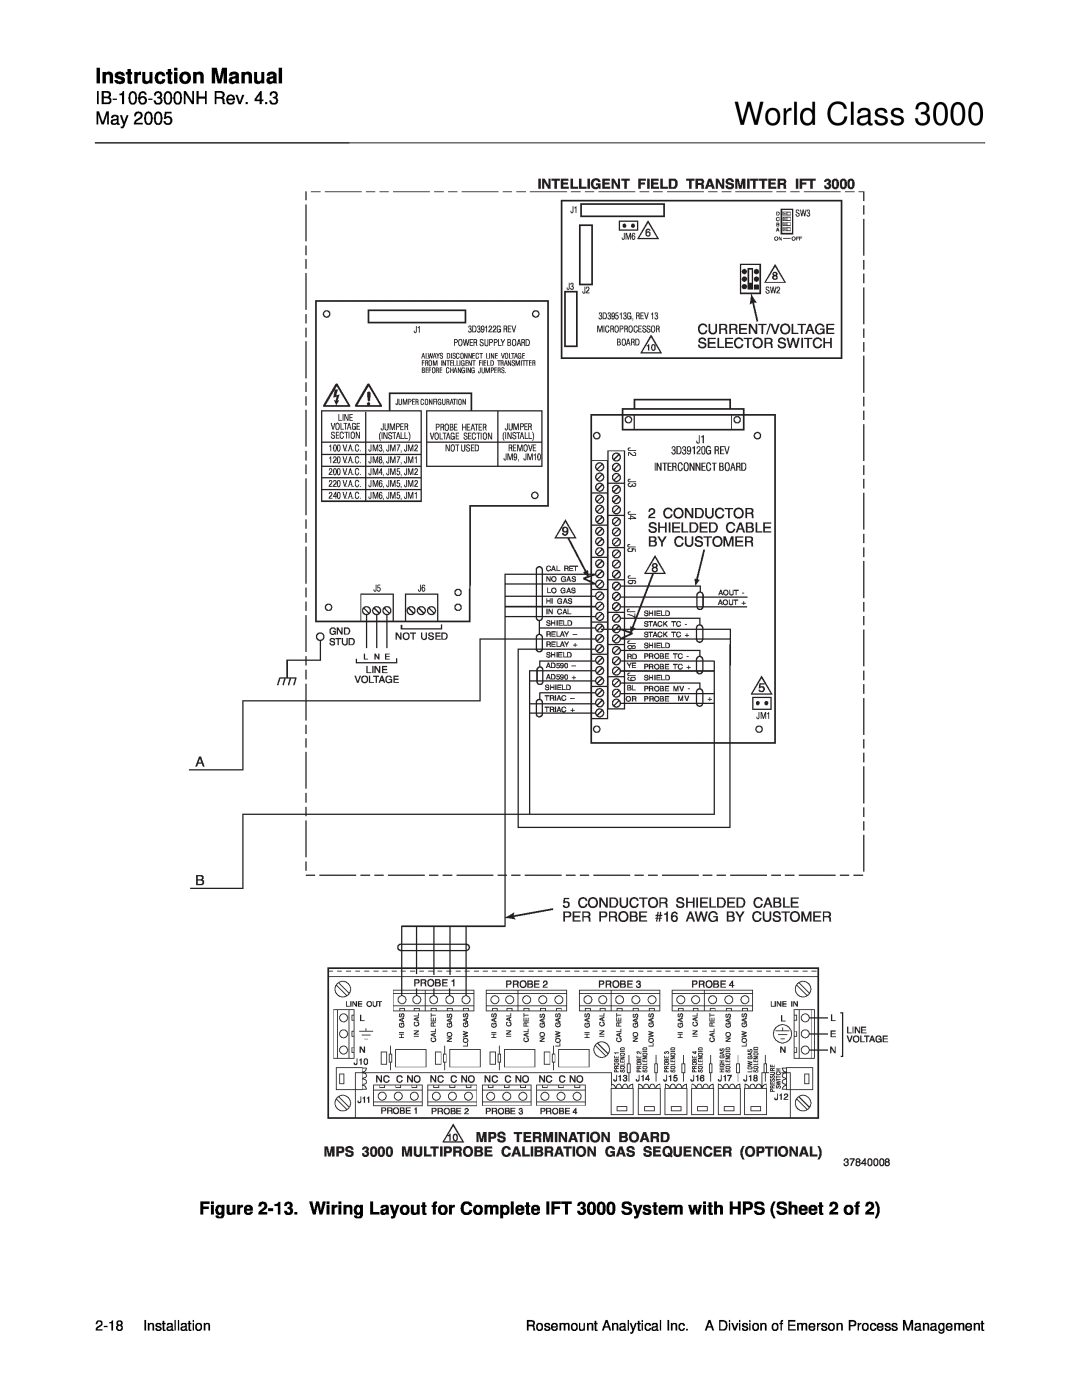 Emerson 3000 World Class, Instruction Manual, Intelligent Field Transmitter Ift, Mps Termination Board, 2-18Installation 